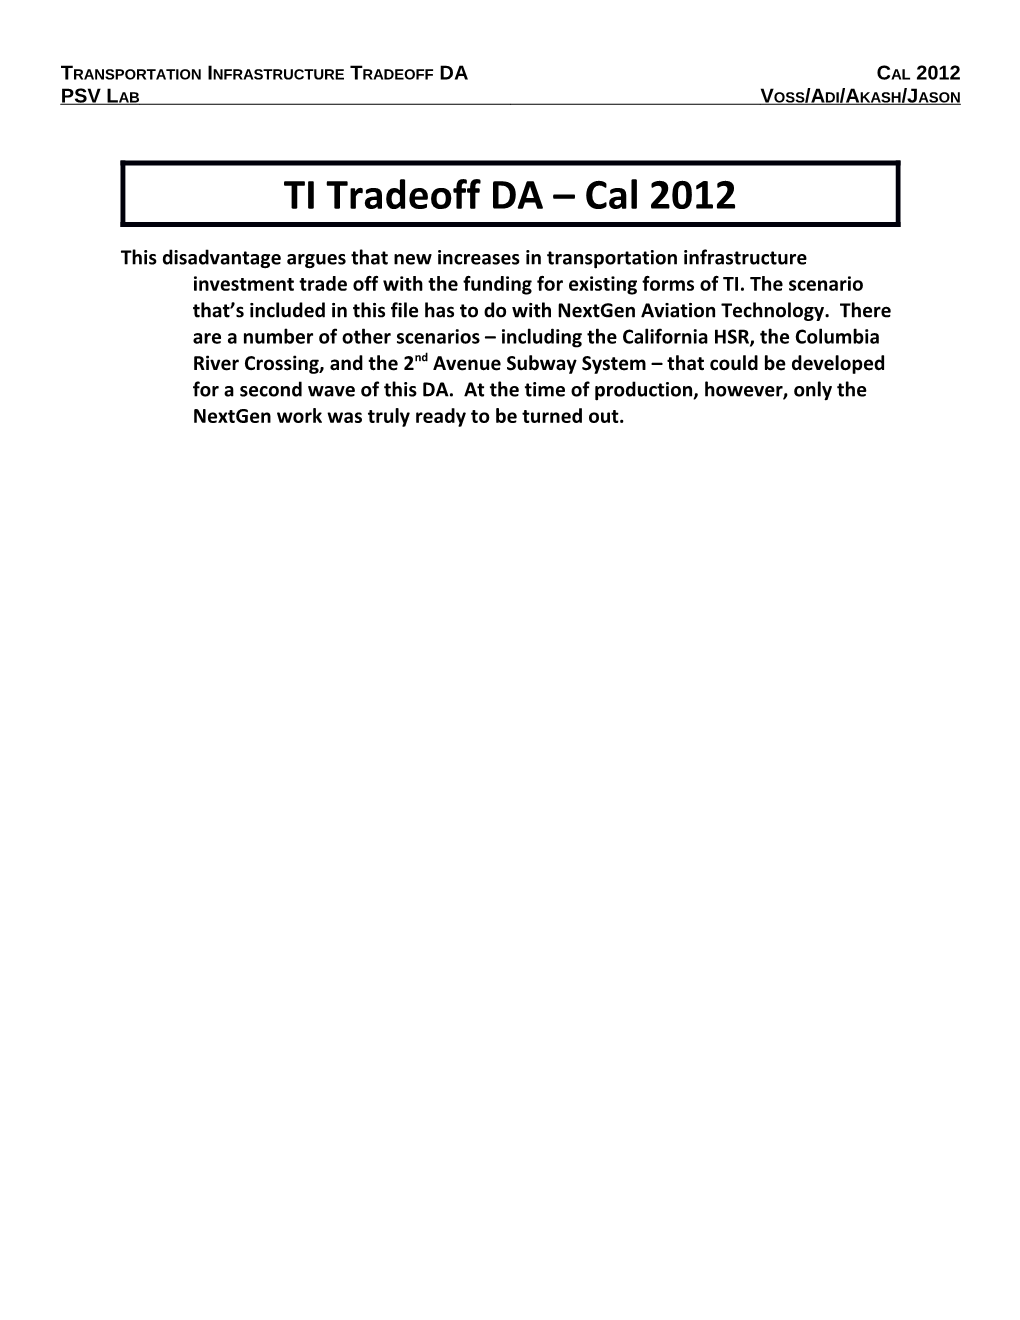 Transportation Infrastructure Tradeoff Dacal 2012